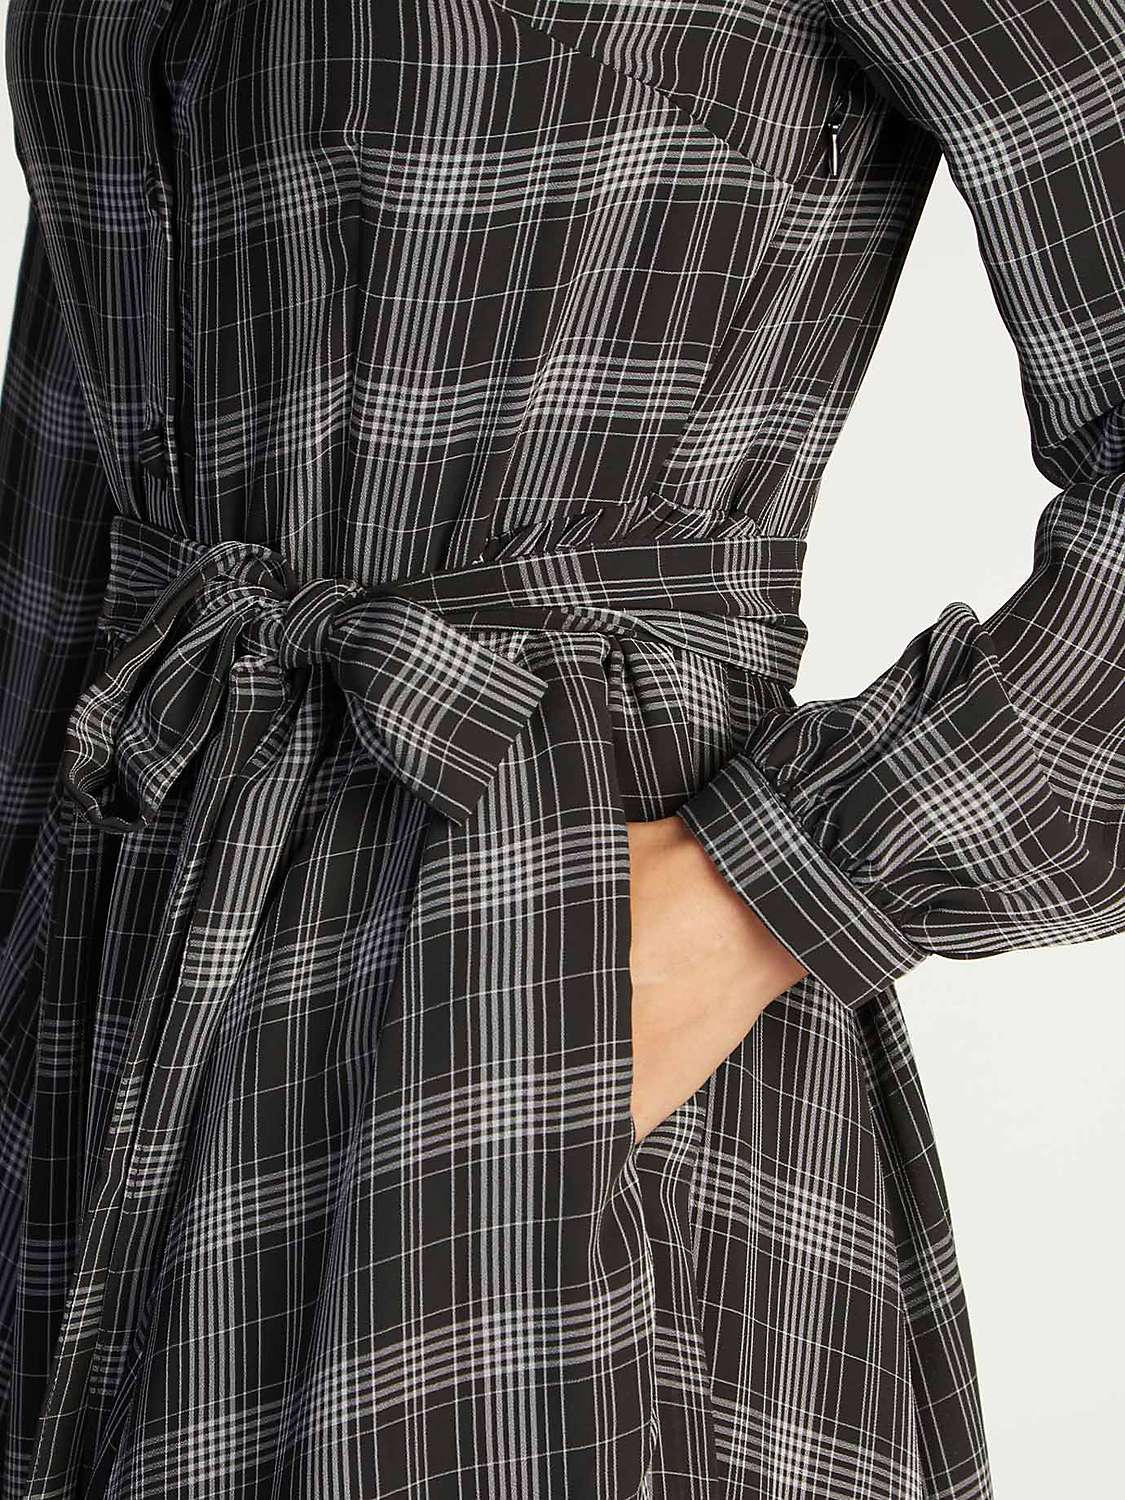 Buy Aab Mono Plaid Check Maxi Dress, Grey Online at johnlewis.com